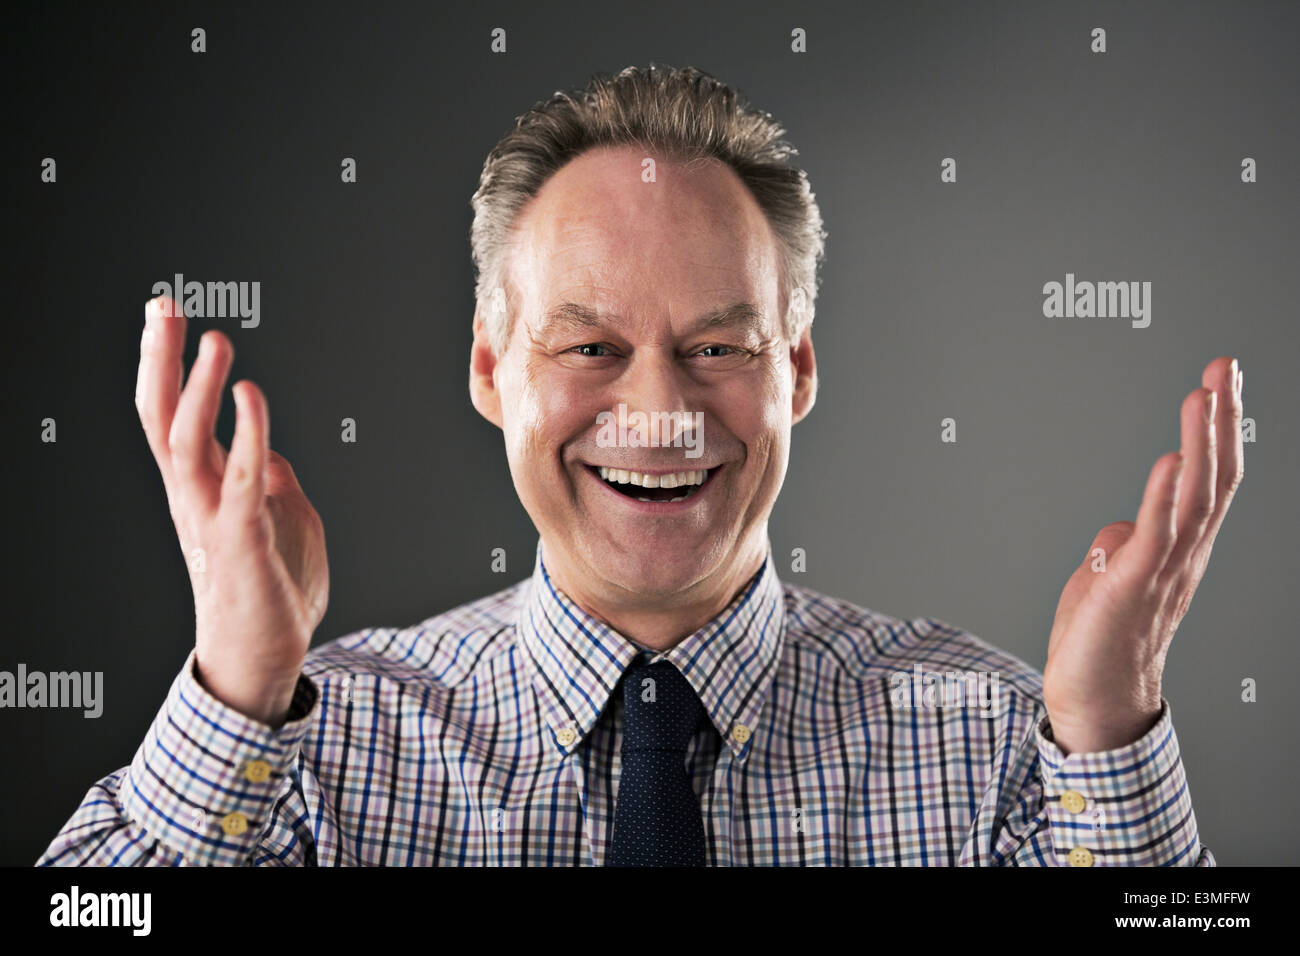 Portrait of smiling businessman gesturing Stock Photo